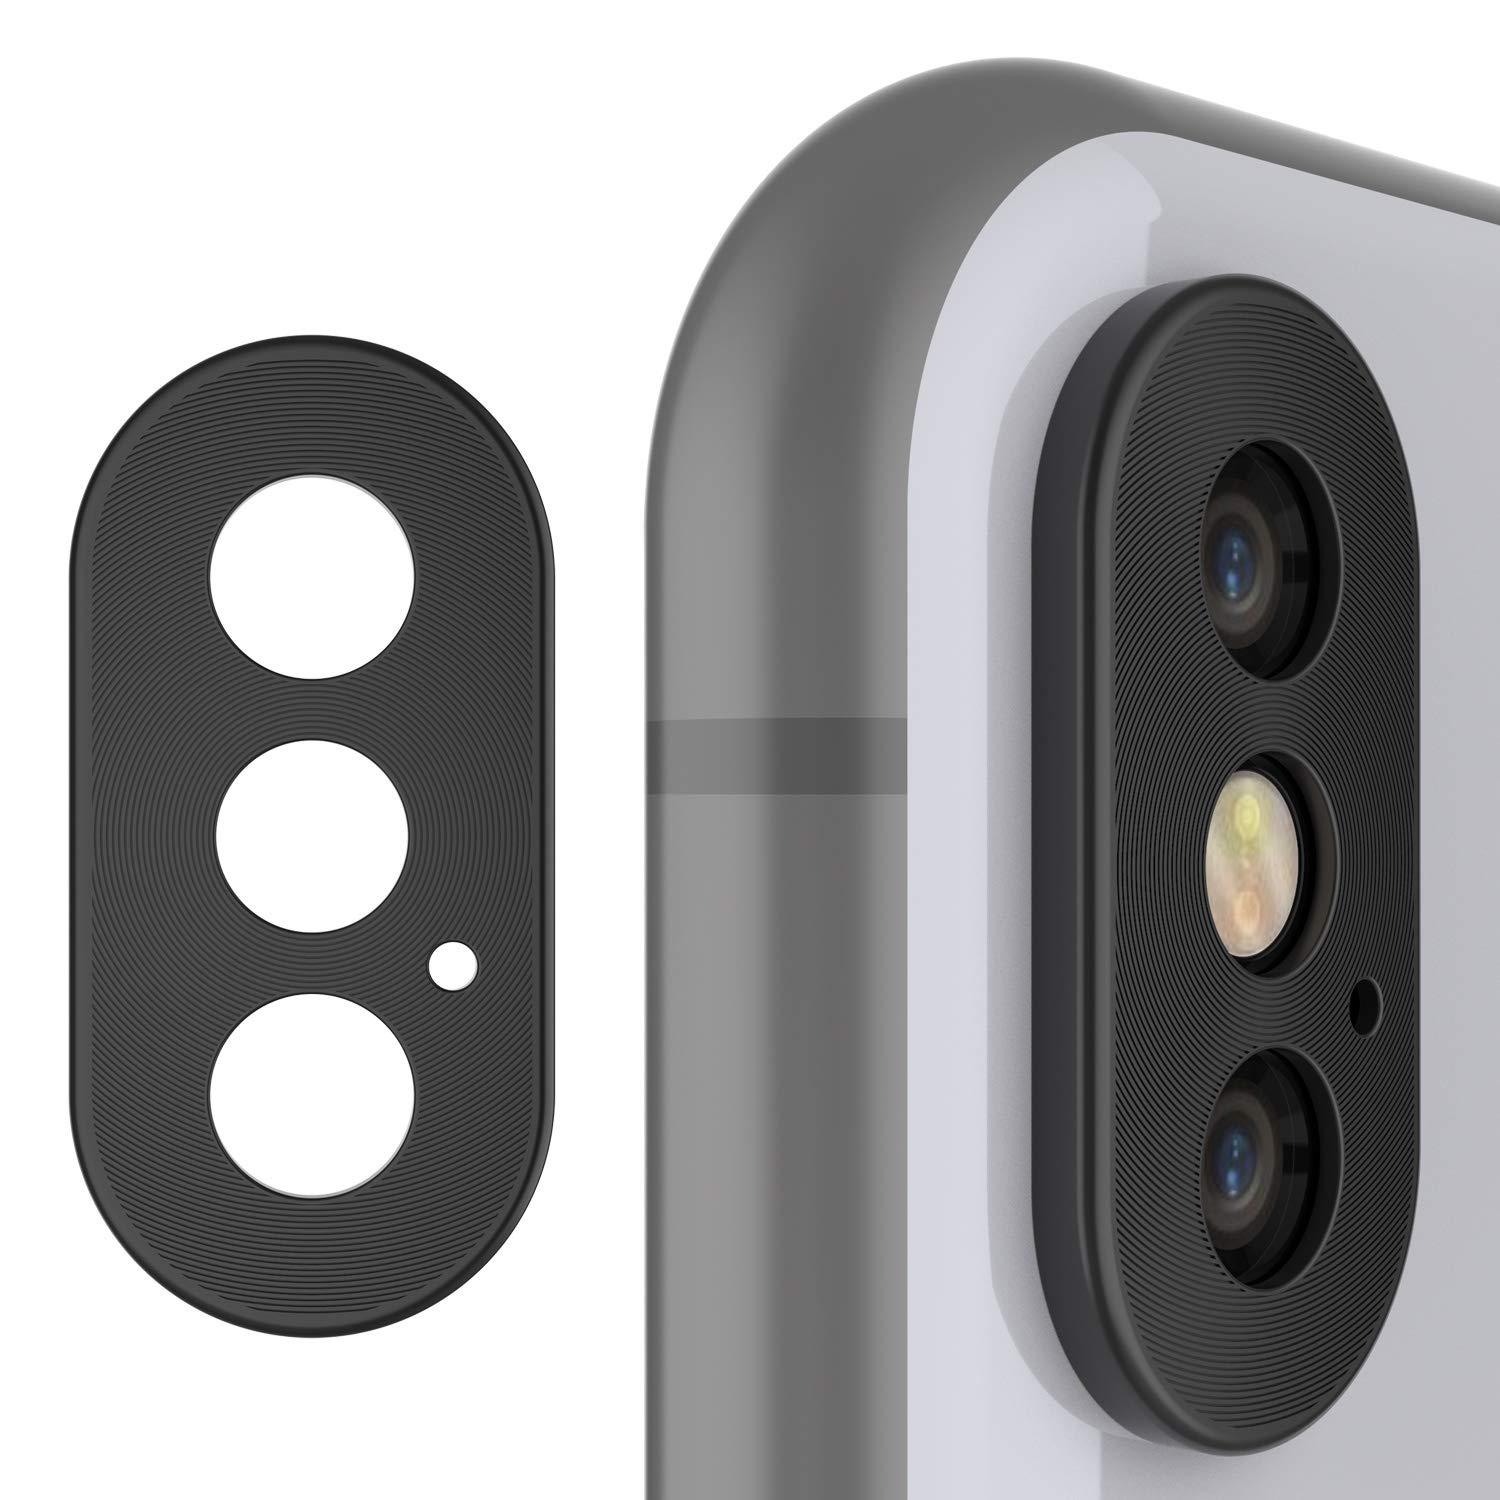 Punkcase iPhone XS Max Camera Protector Ring [Black]